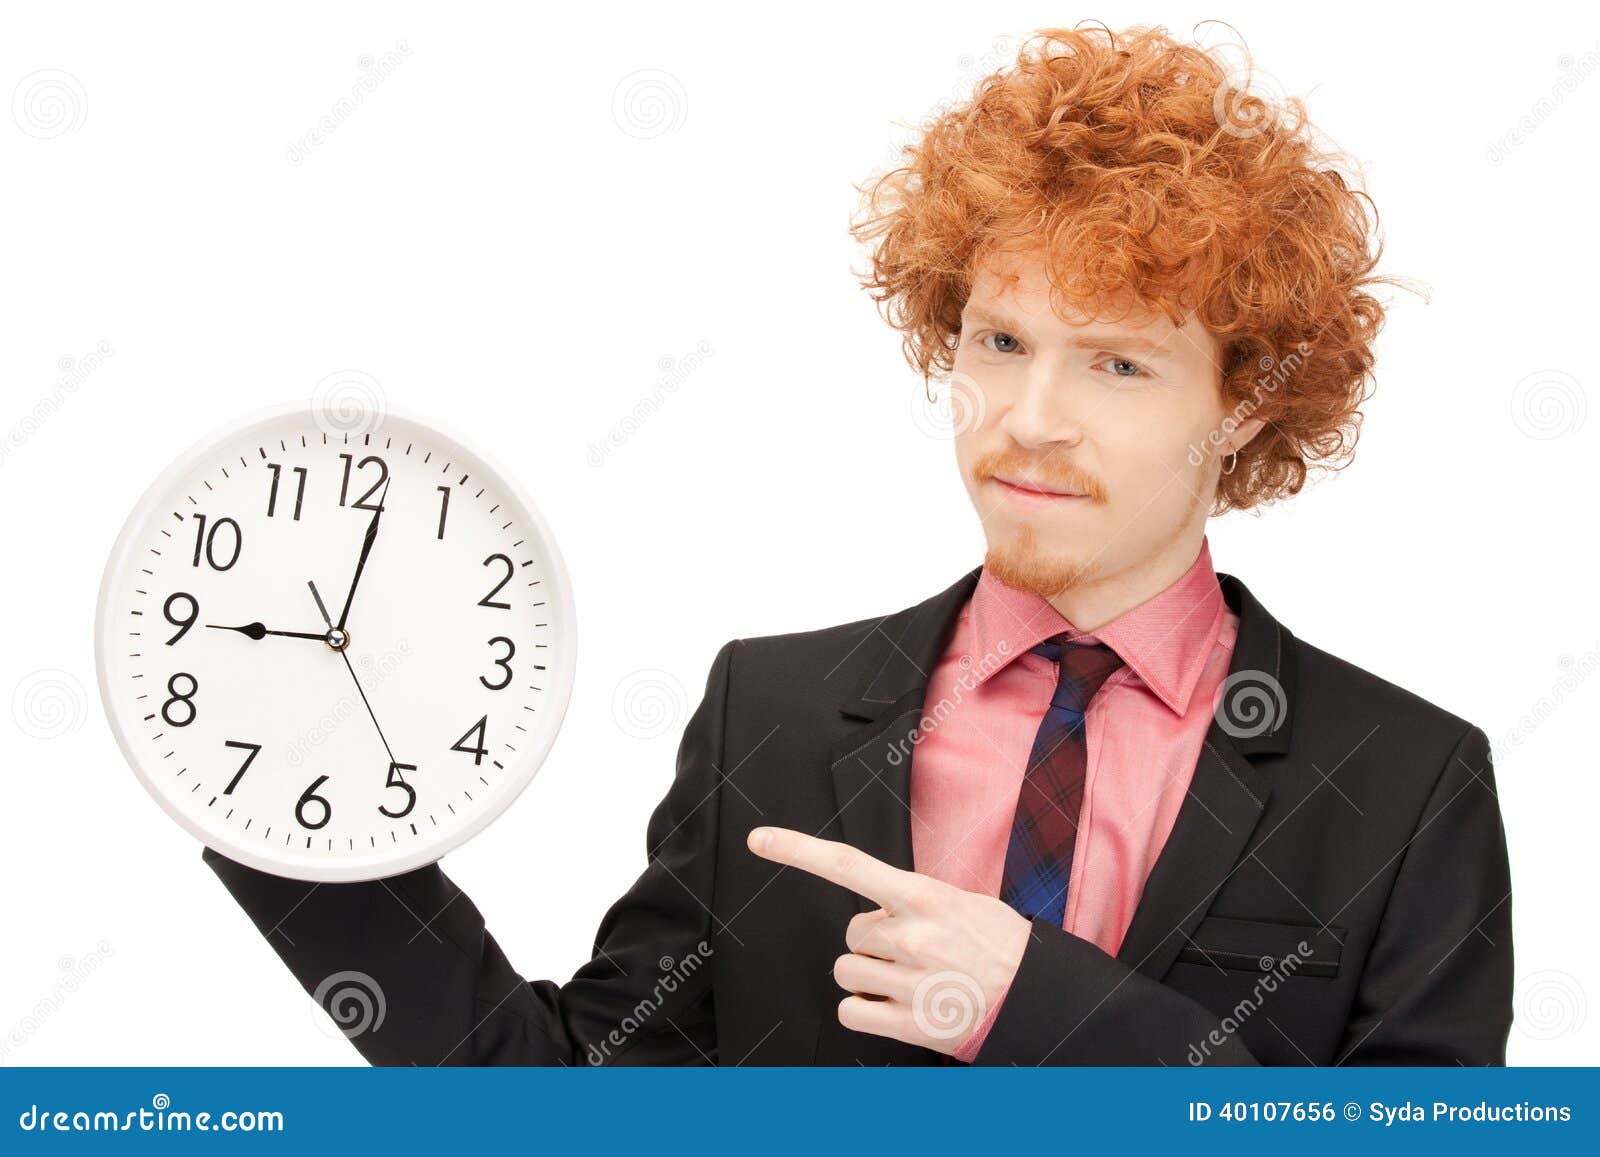 Фото клок мена 2.0. Man with Clock. Clock man фото. Фото клок Мена. Клок мен учёный.